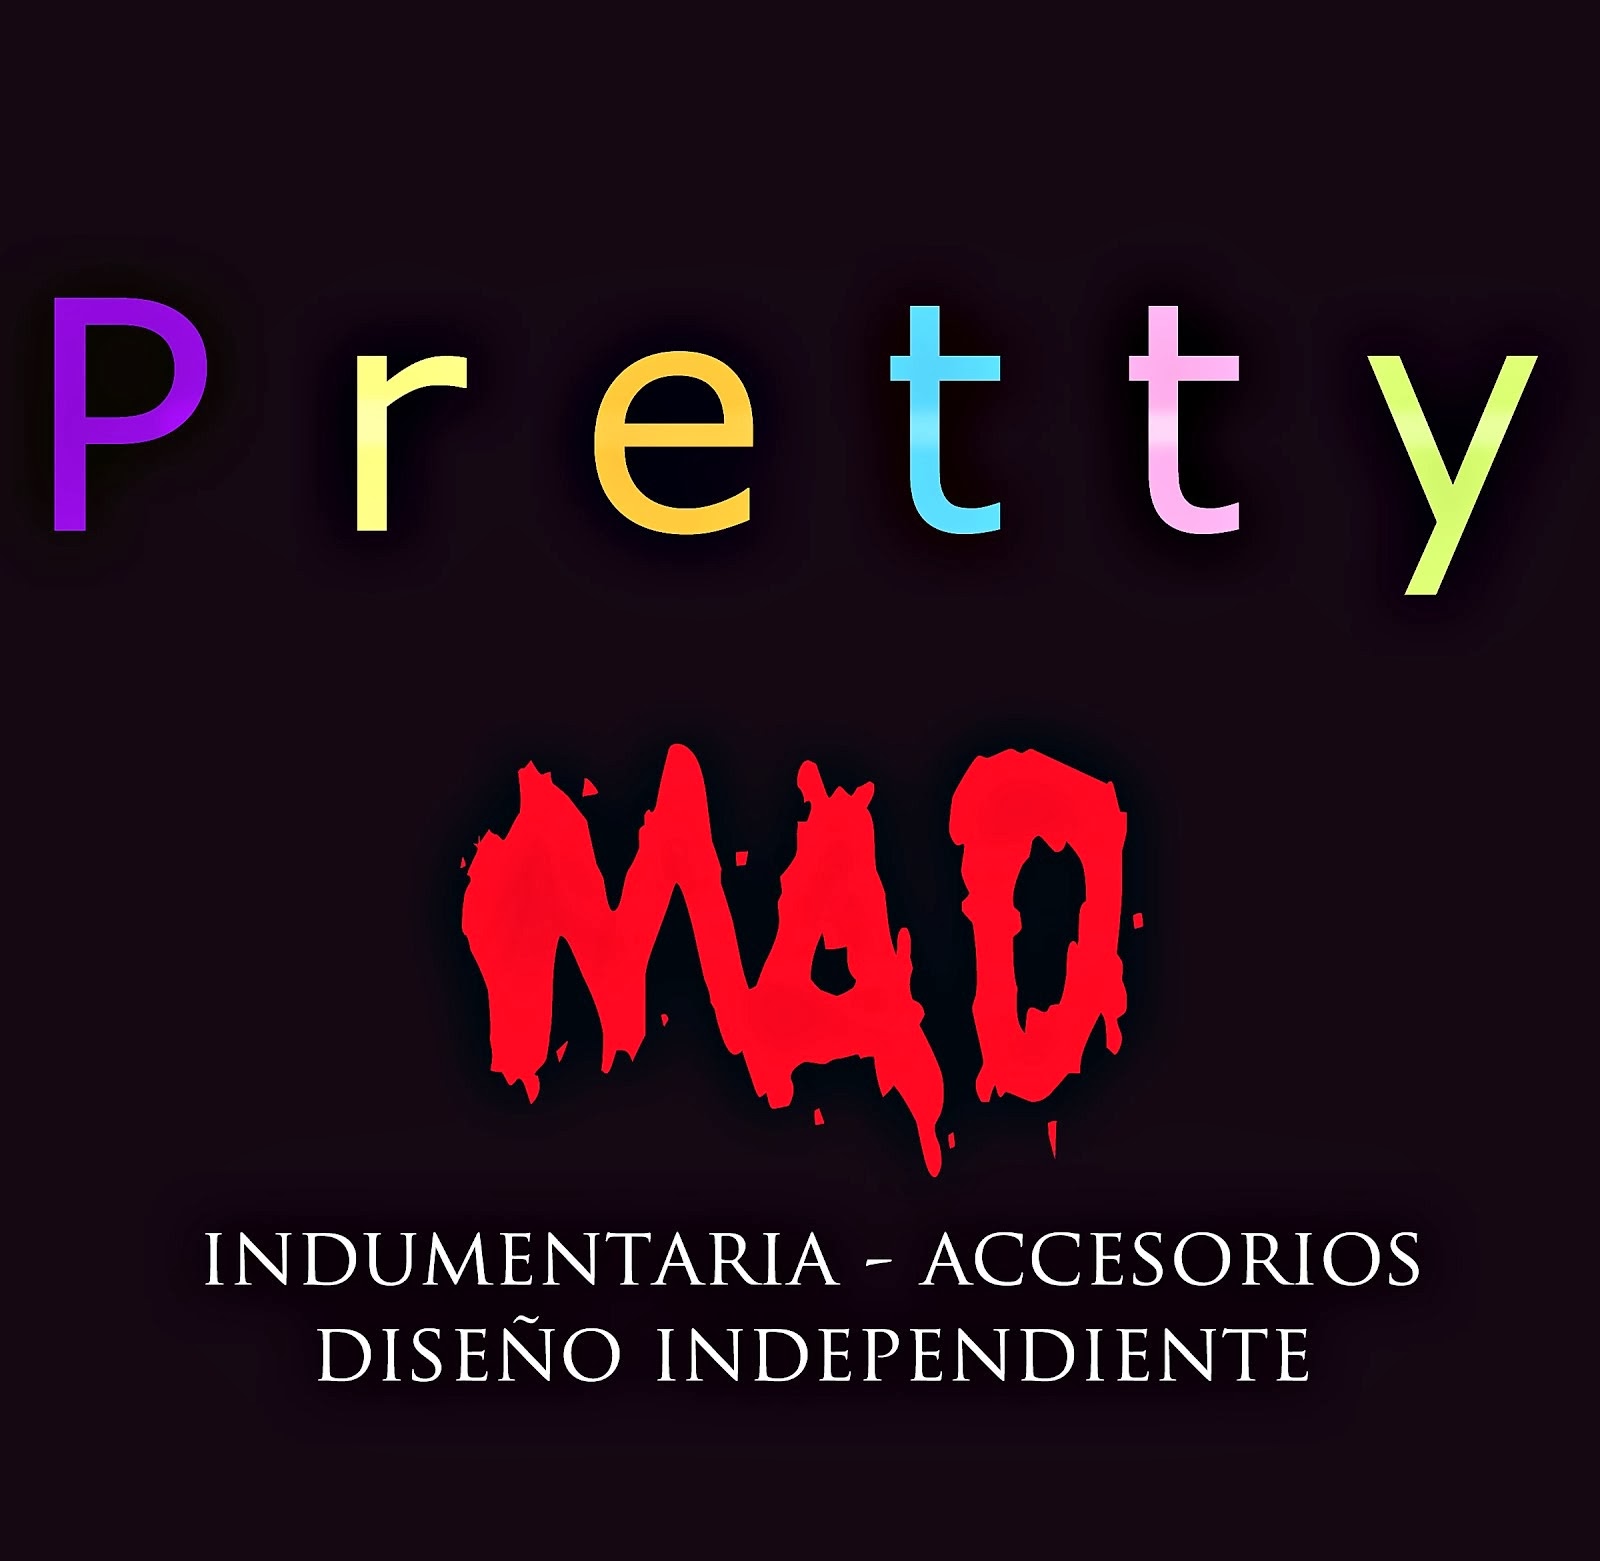 "Me gusta" Pretty MAD  - Facebook